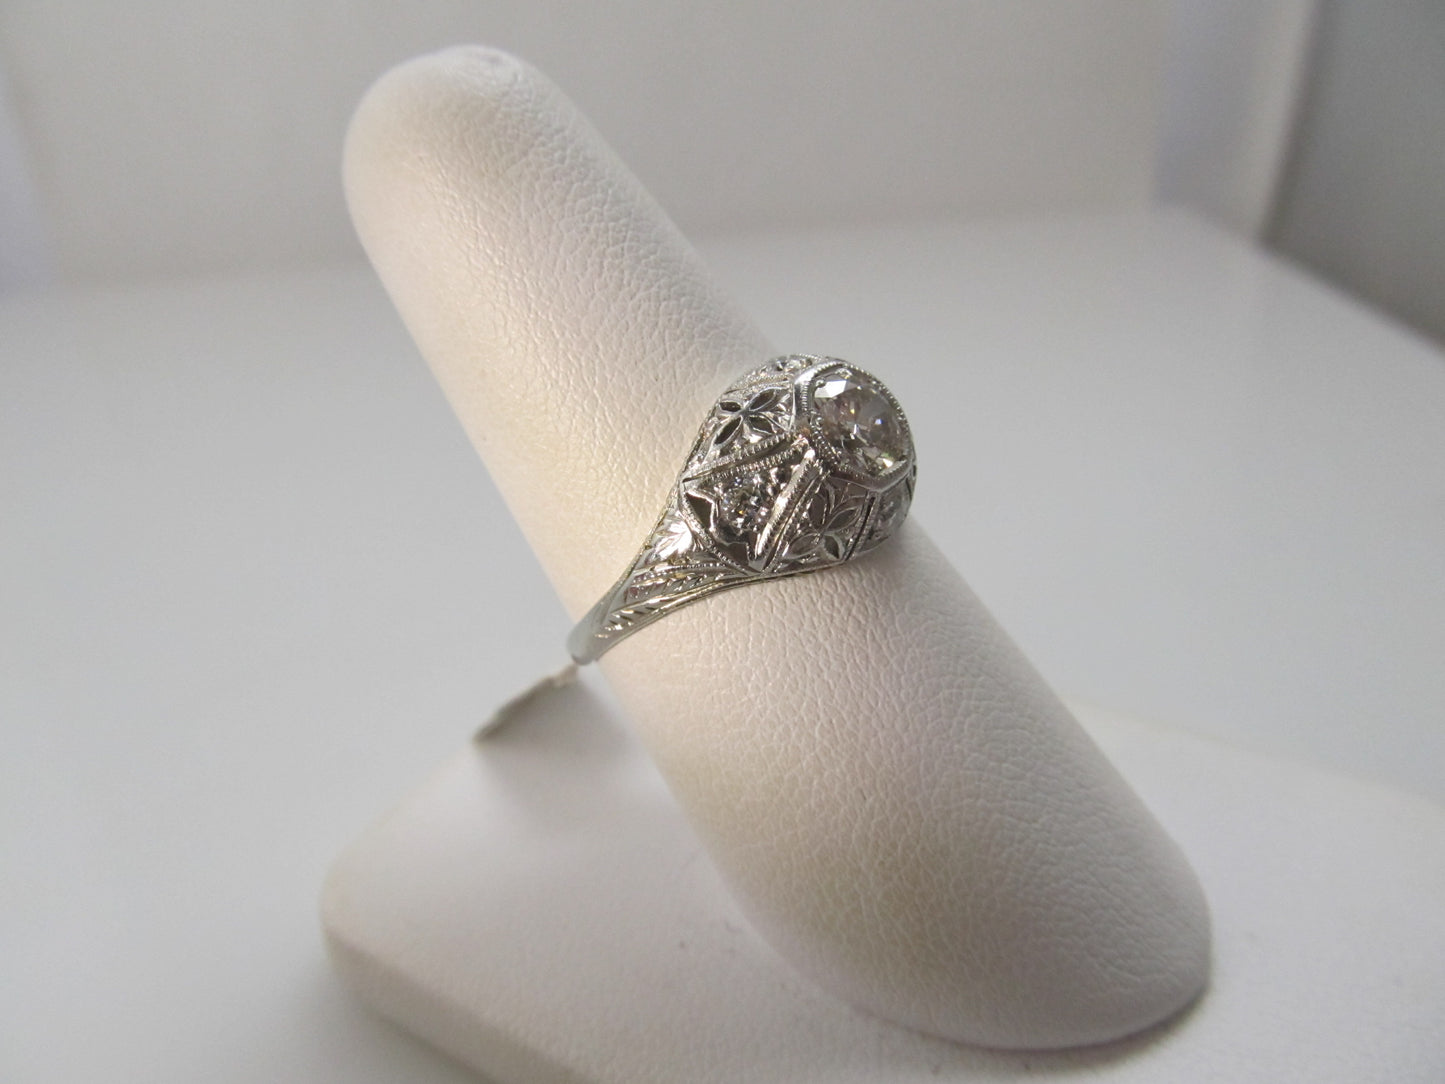 Antique filigree diamond ring